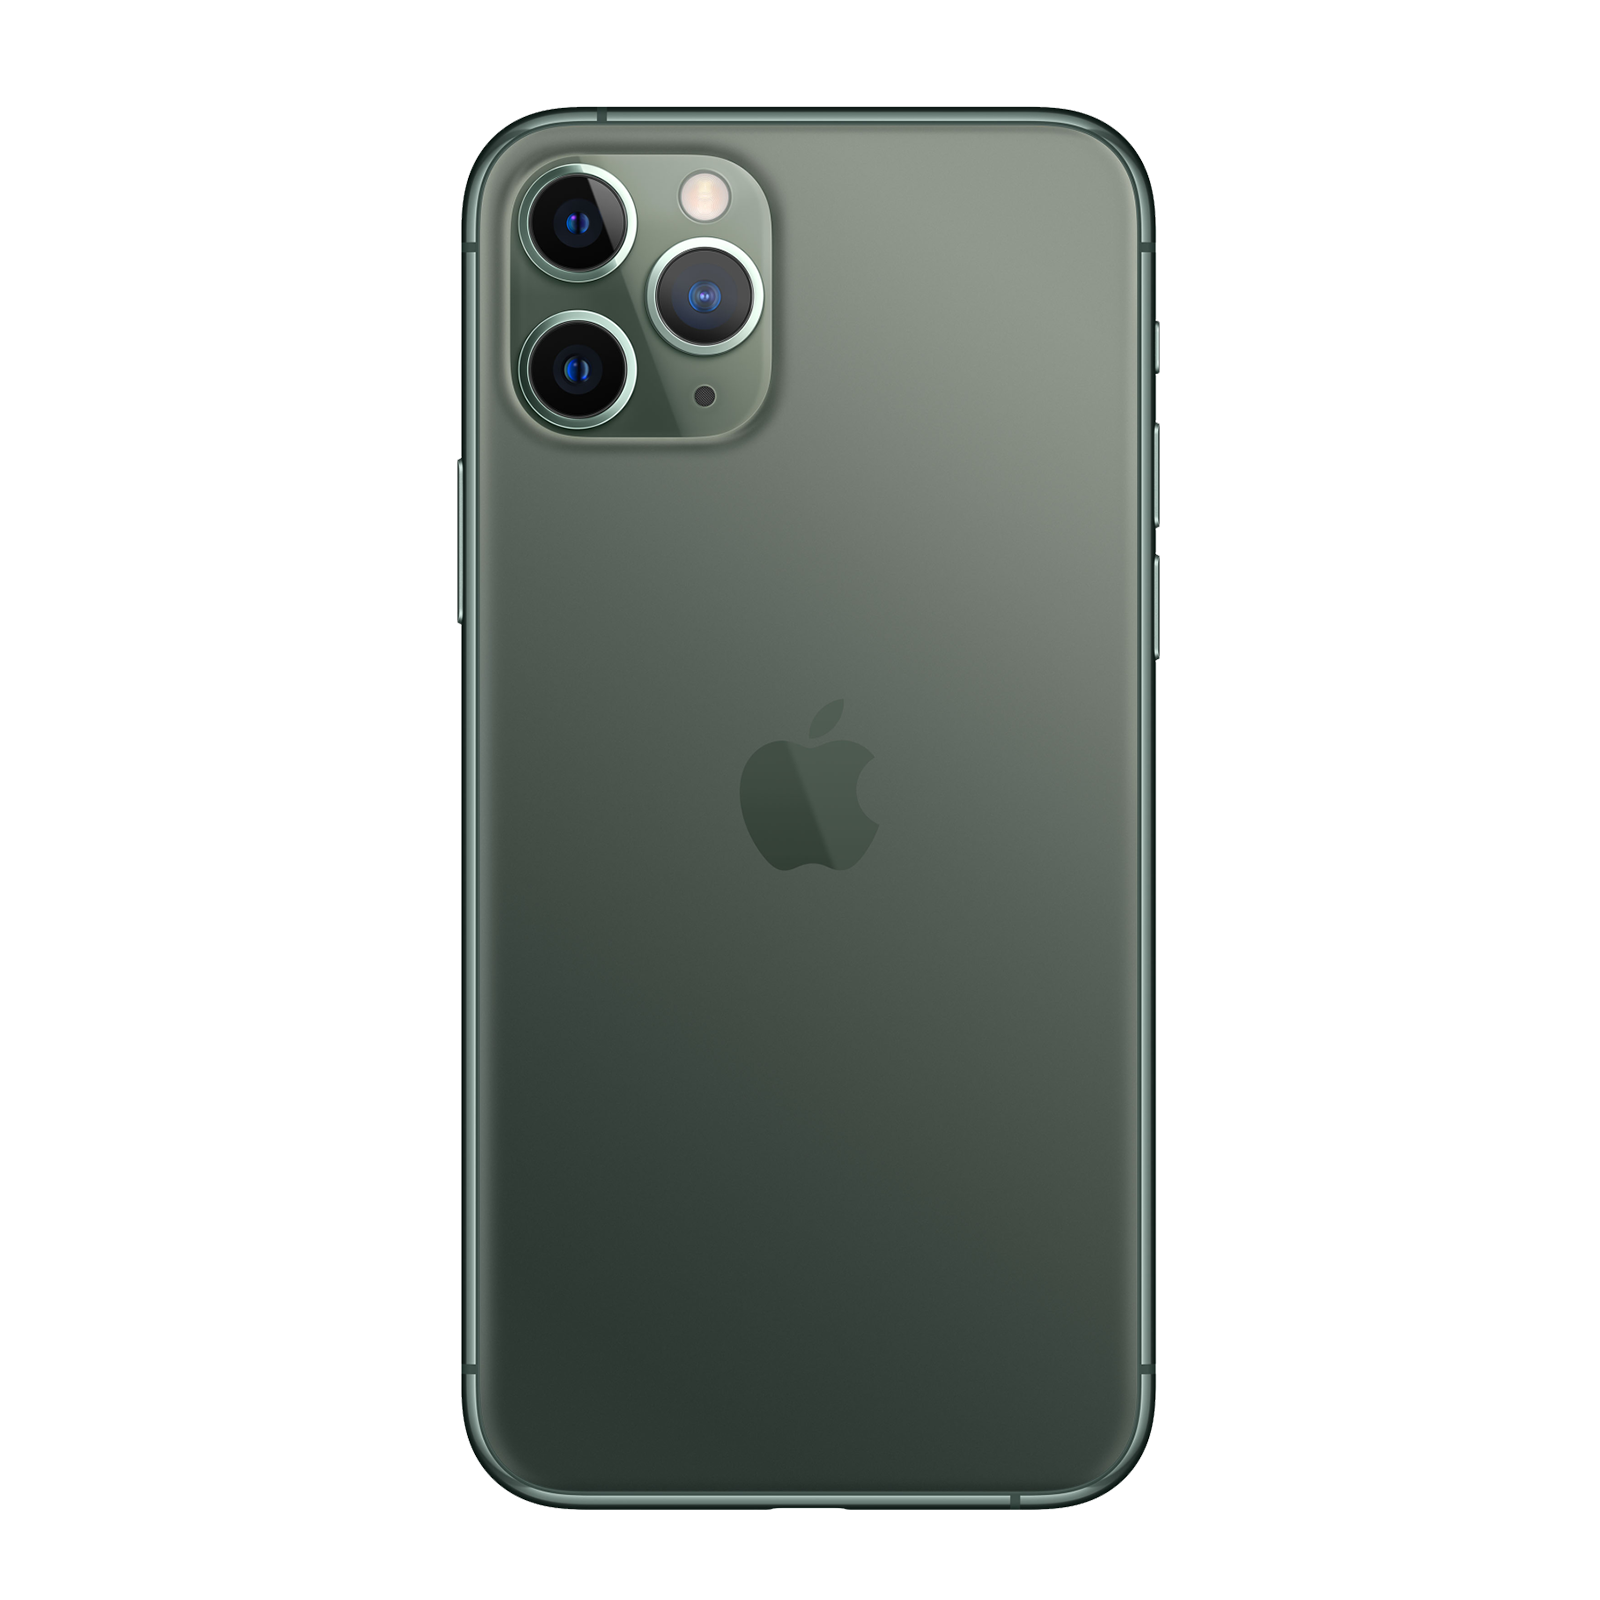 Apple iPhone 11 Pro 64GB Green Pristine Unlocked – Loop Mobile - US